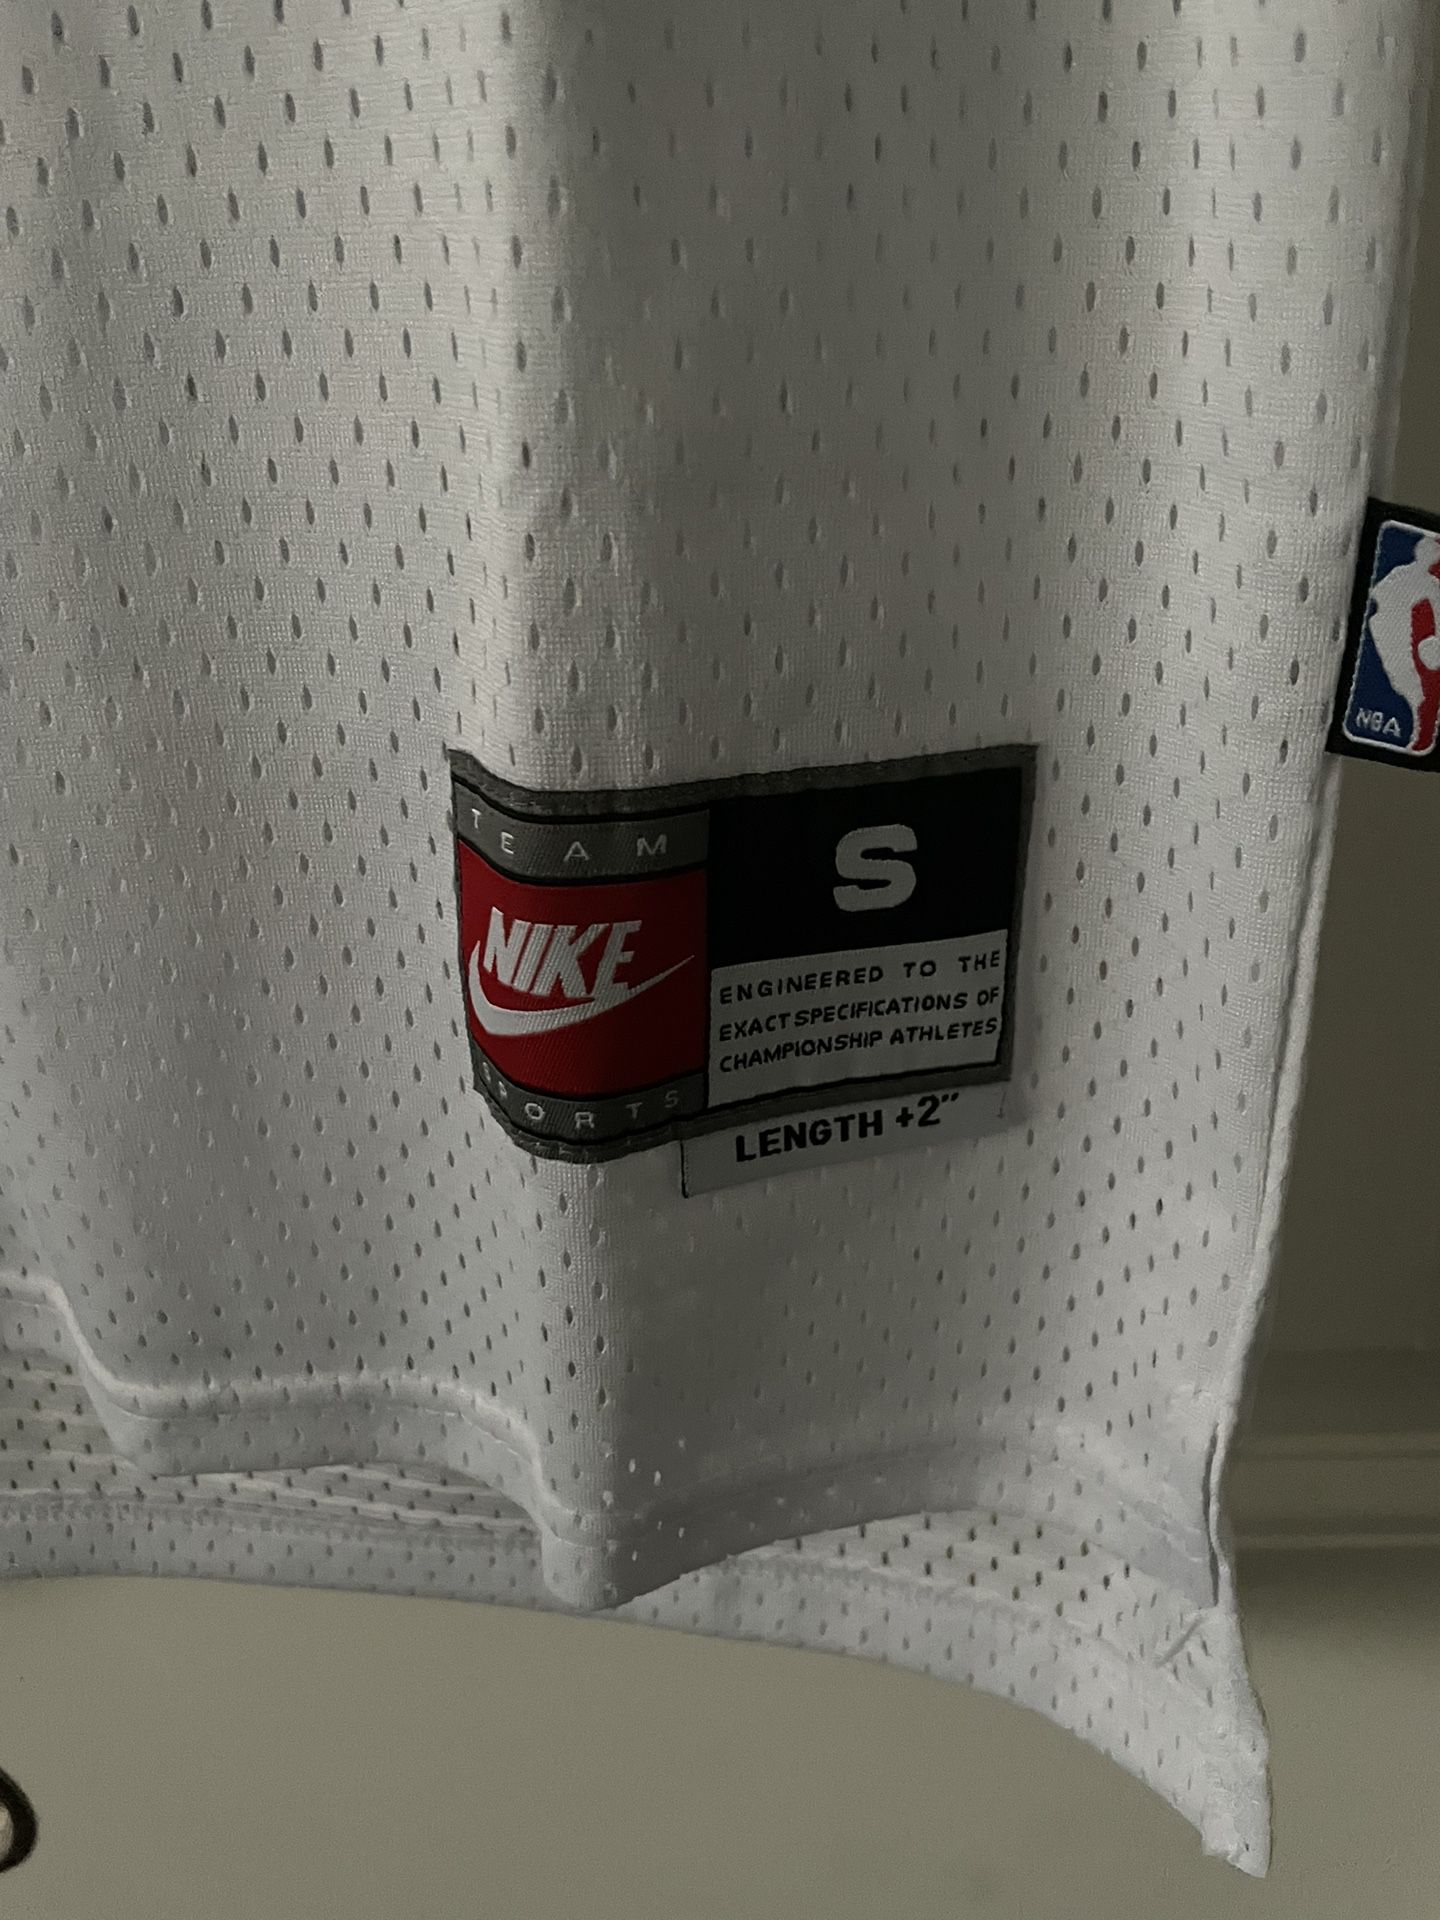 Nike Sacramento Kings Jason Williams Jersey Worn - Depop